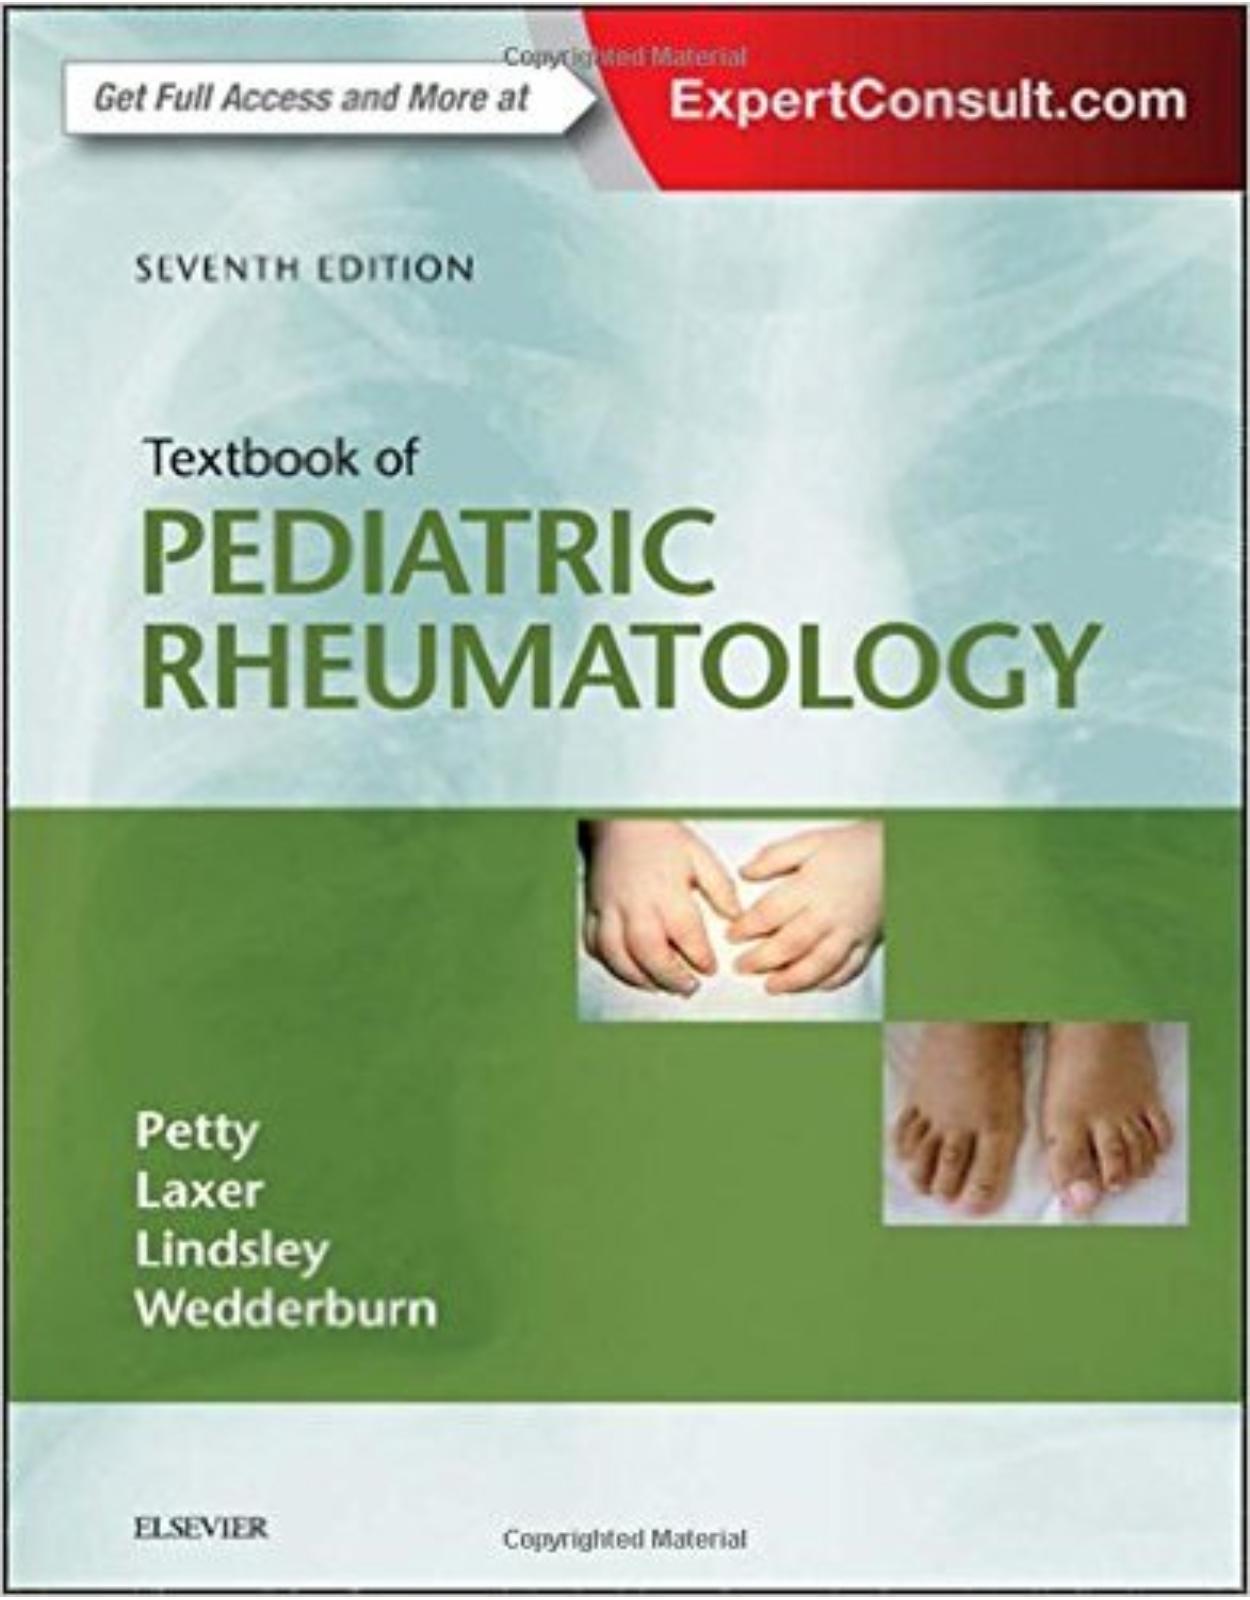 Textbook of Pediatric Rheumatology, 7e 